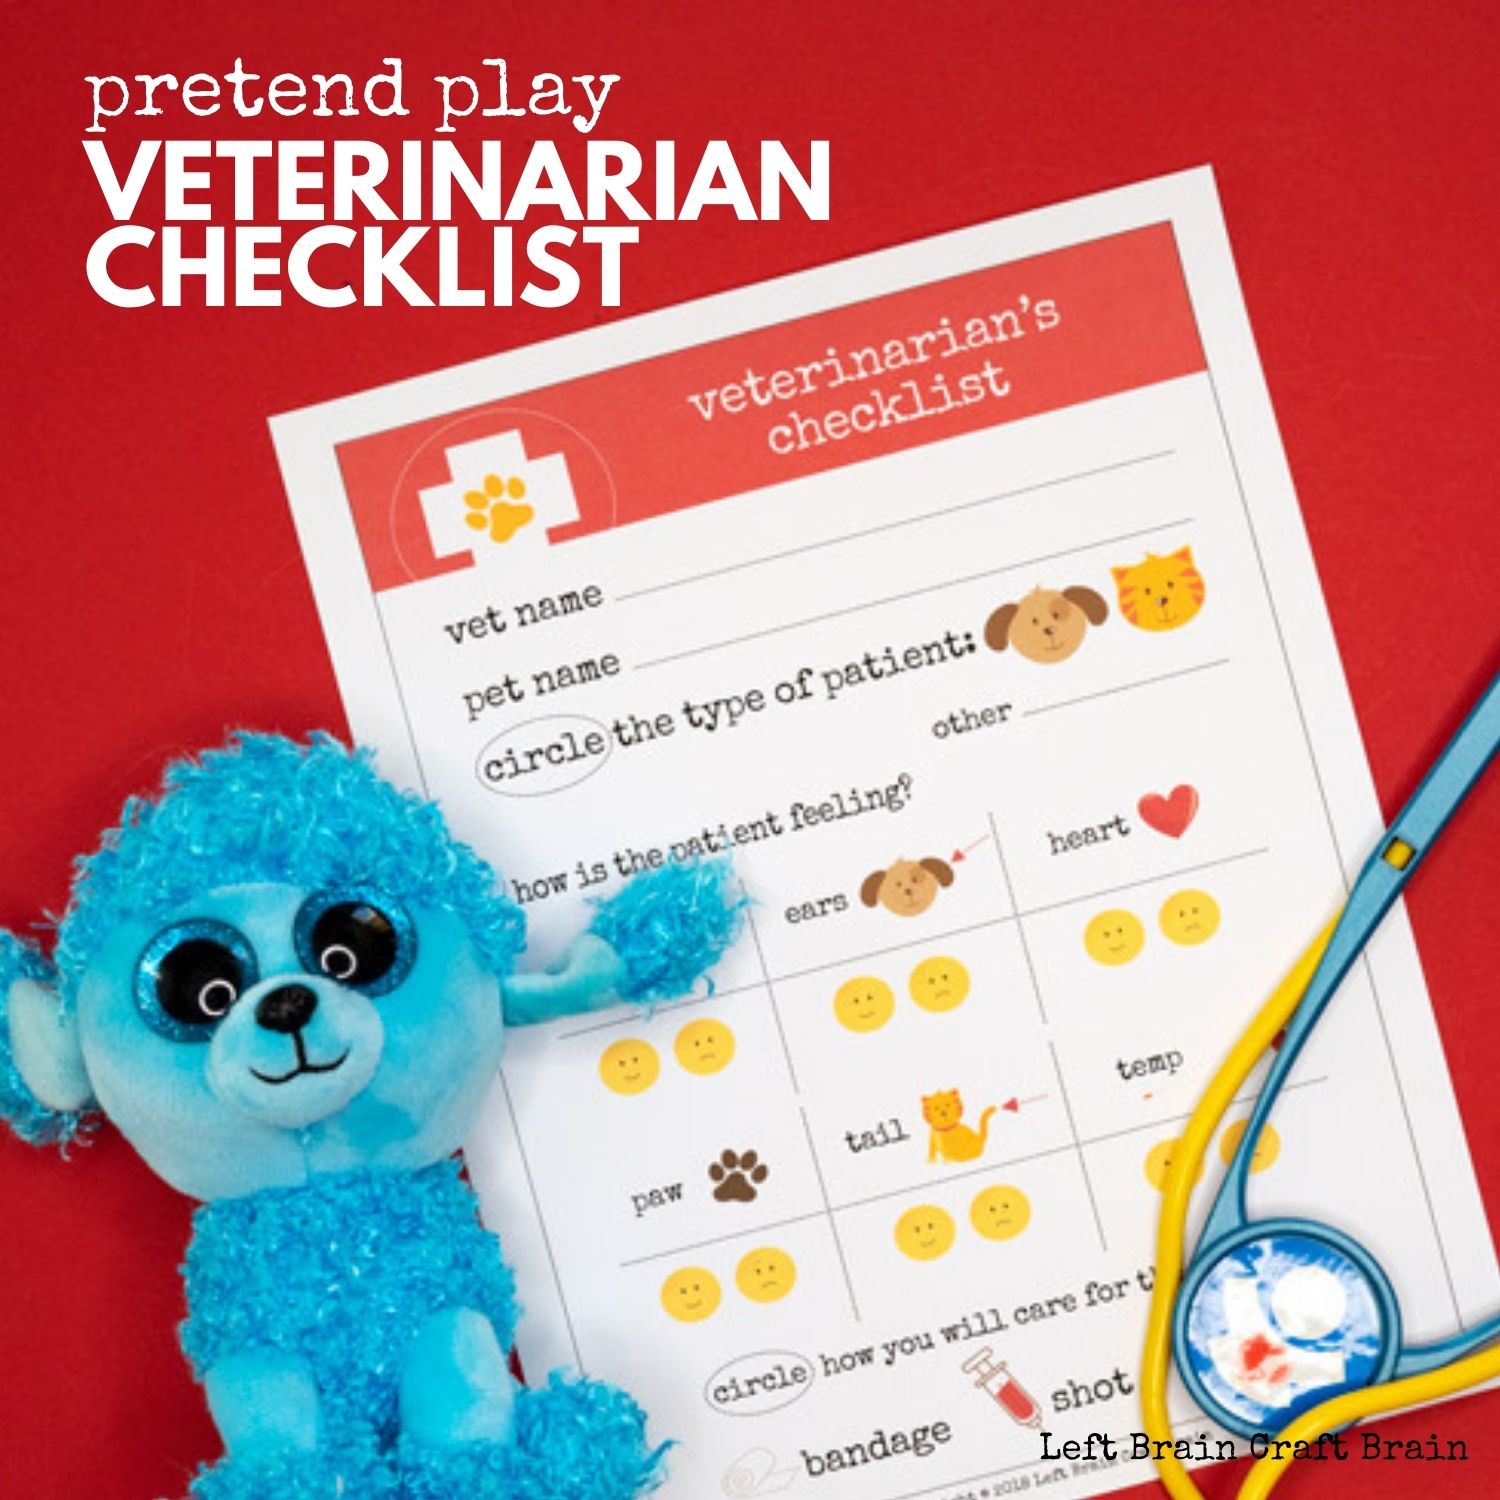 pretend play veterinarian checklist 1500x1500